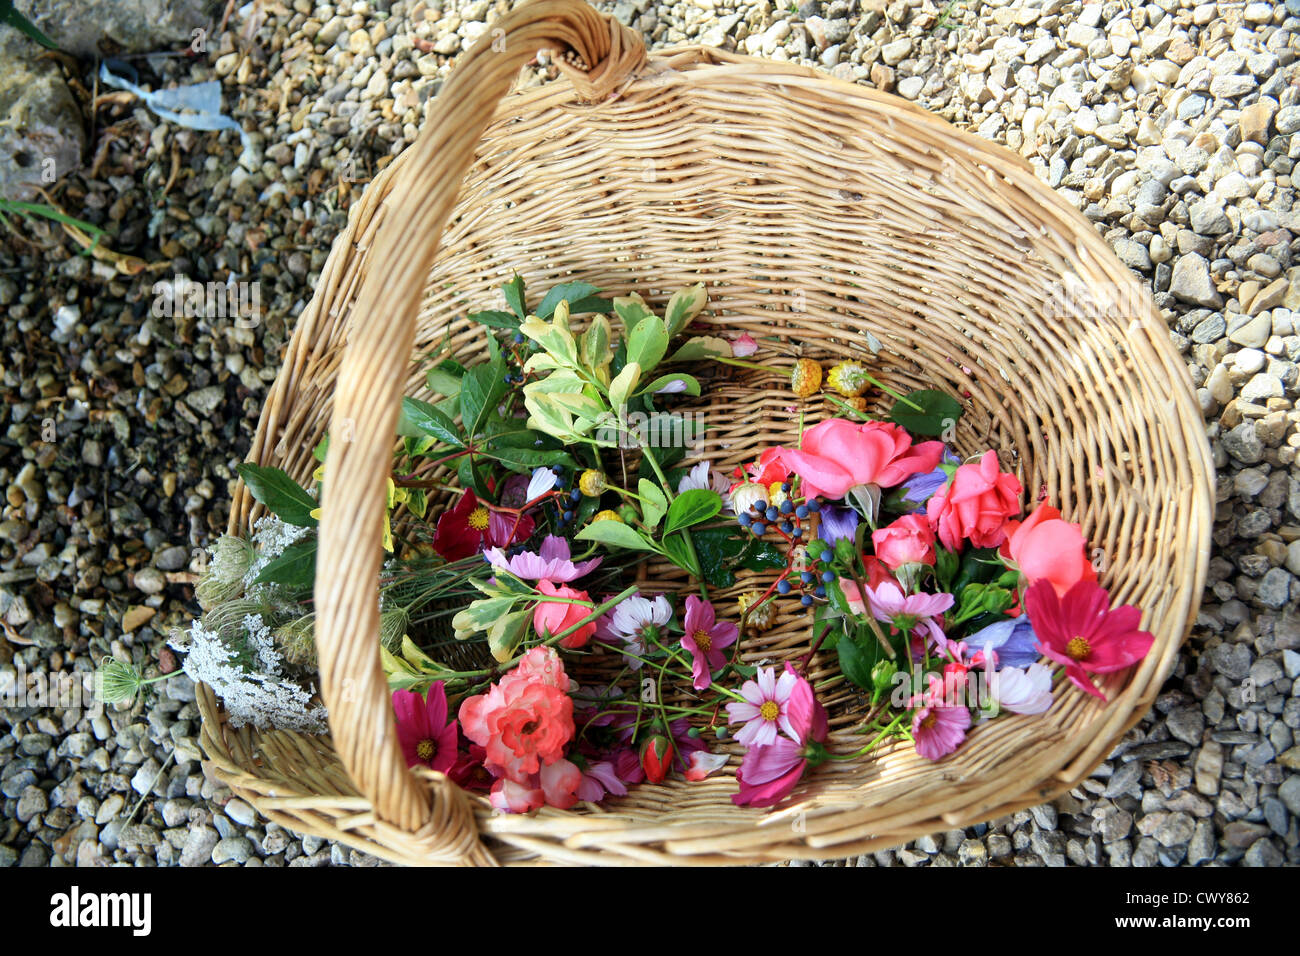 Wicker basket with fresh cut flowers Stock Photo